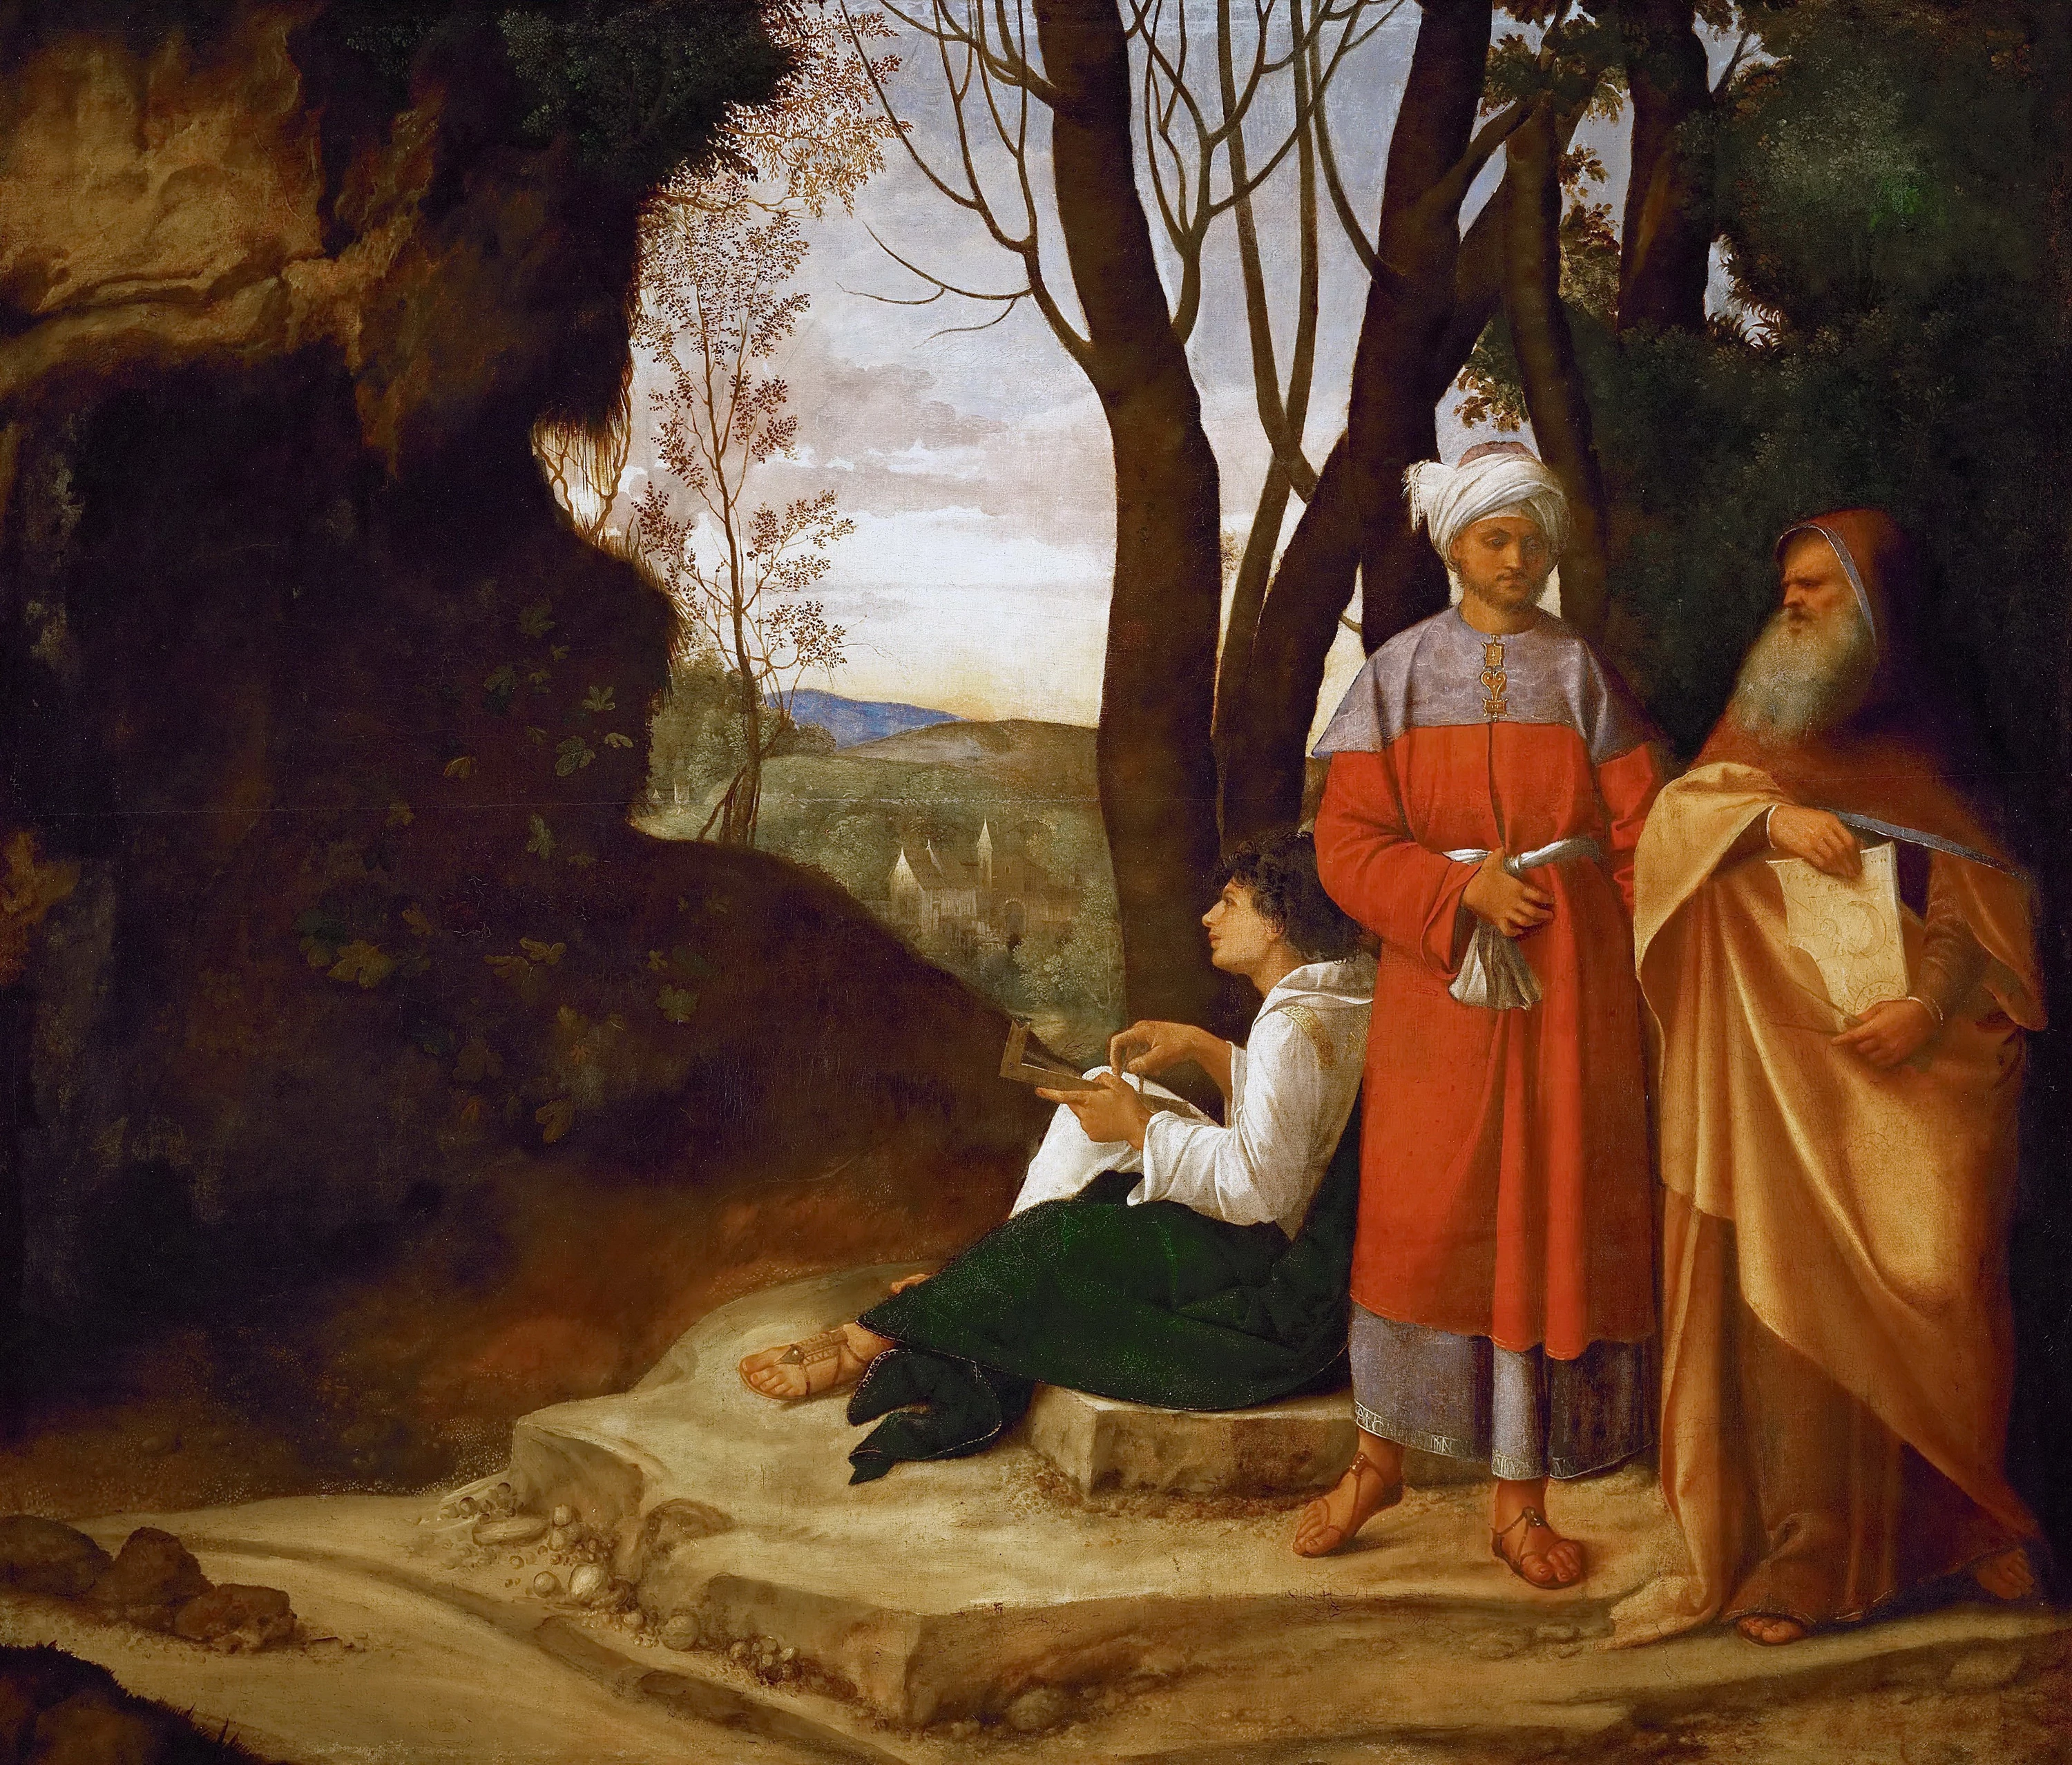 The Three Philosophers, Giorgione